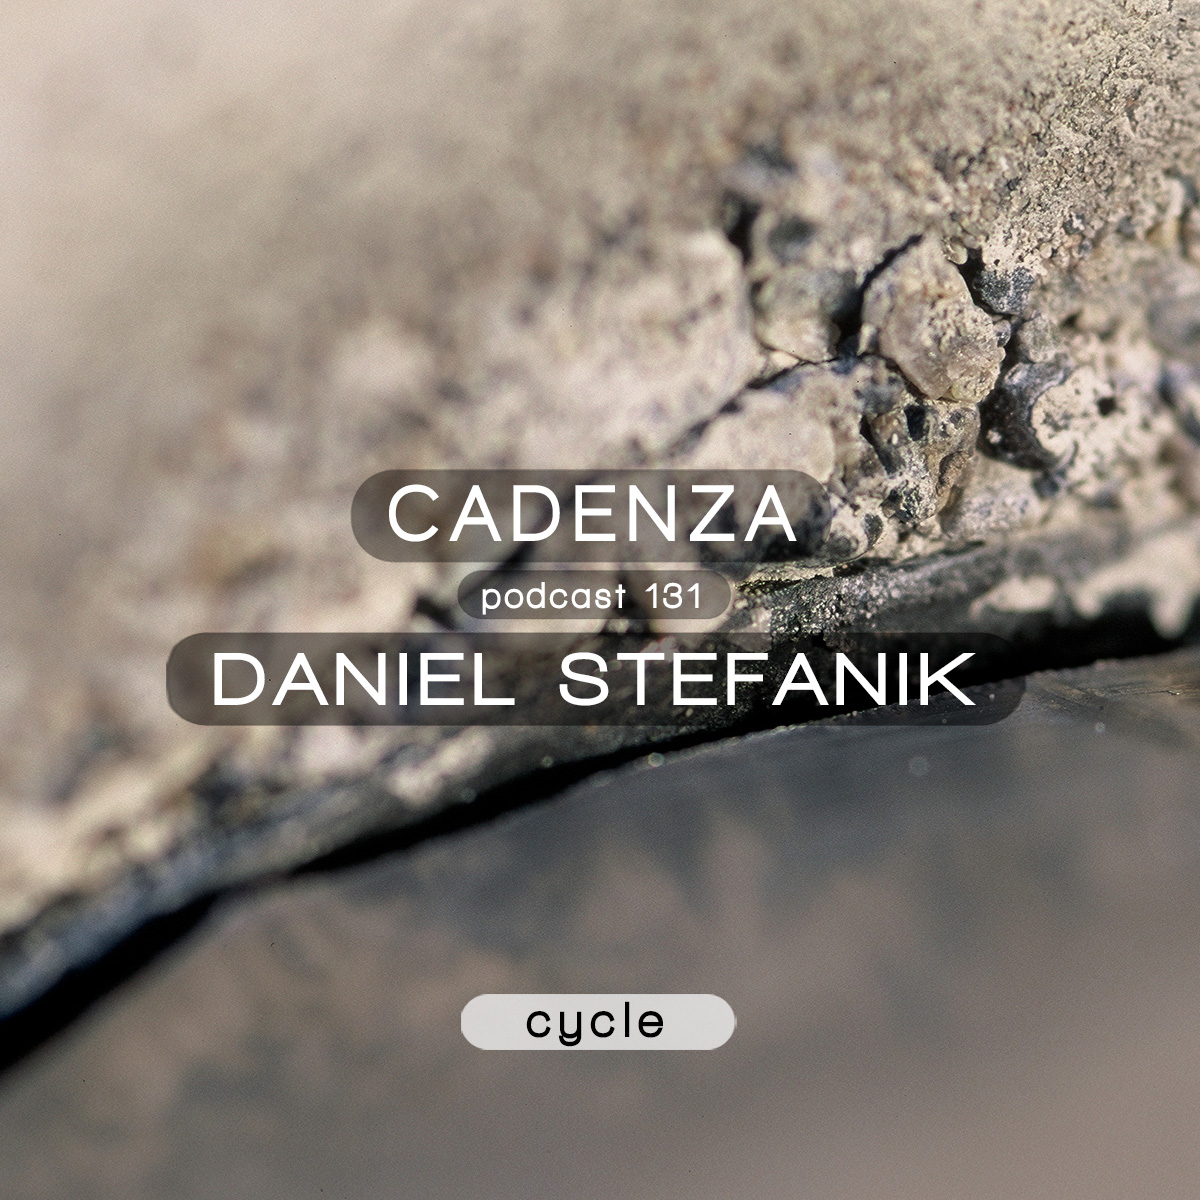 Cadenza Podcast | 131 - Daniel Stefanik (Cycle)